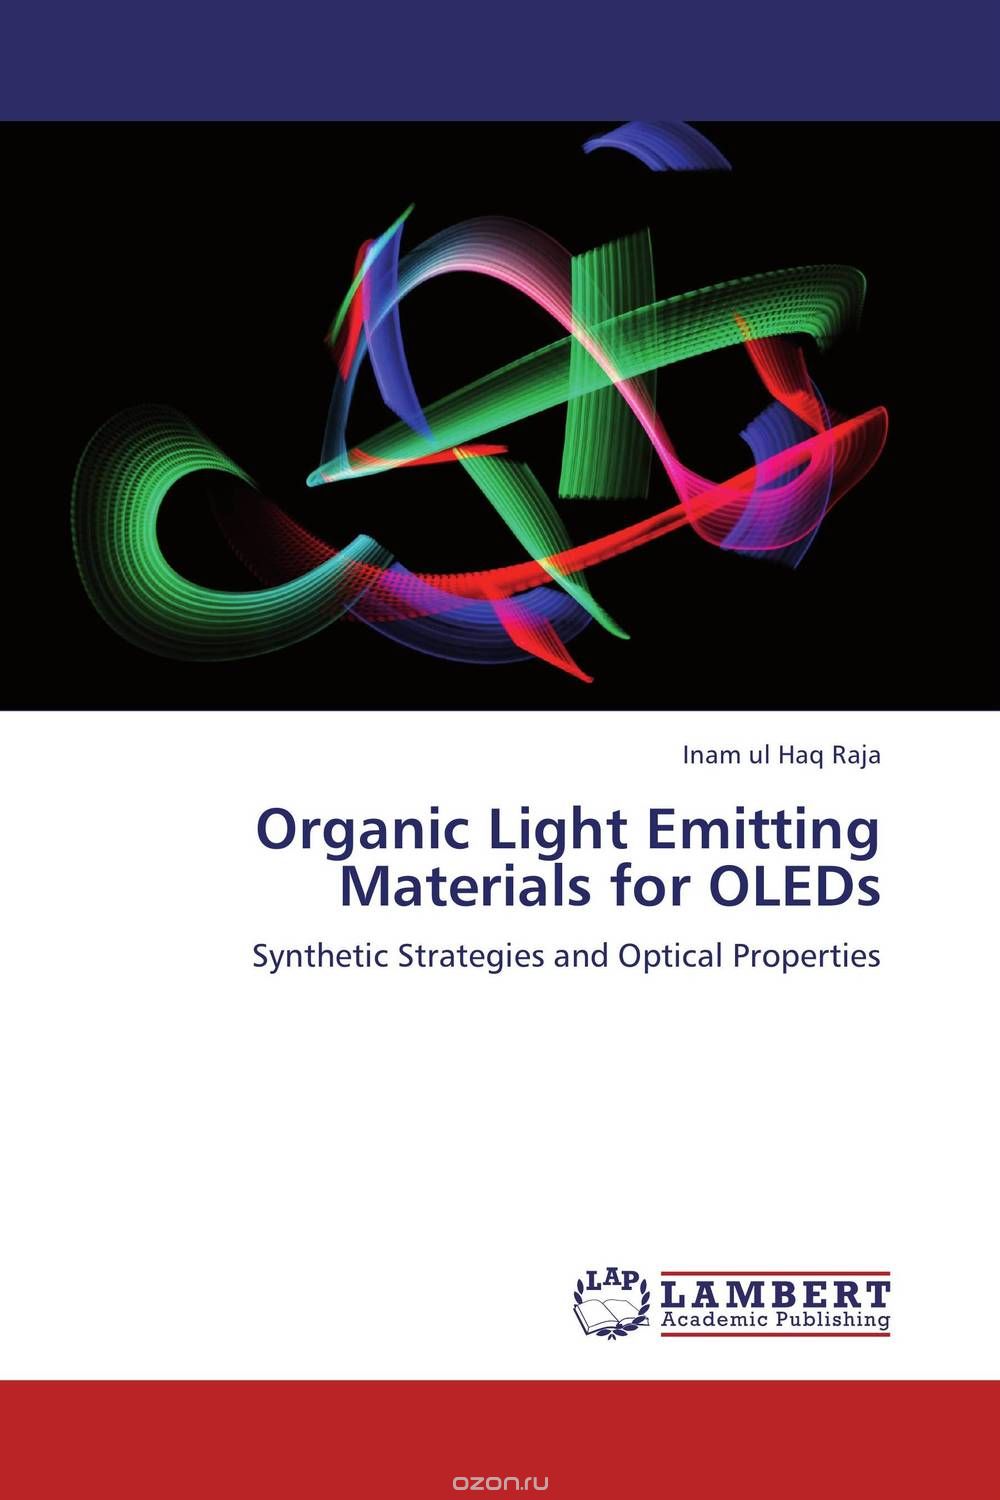 Скачать книгу "Organic Light Emitting Materials for OLEDs"